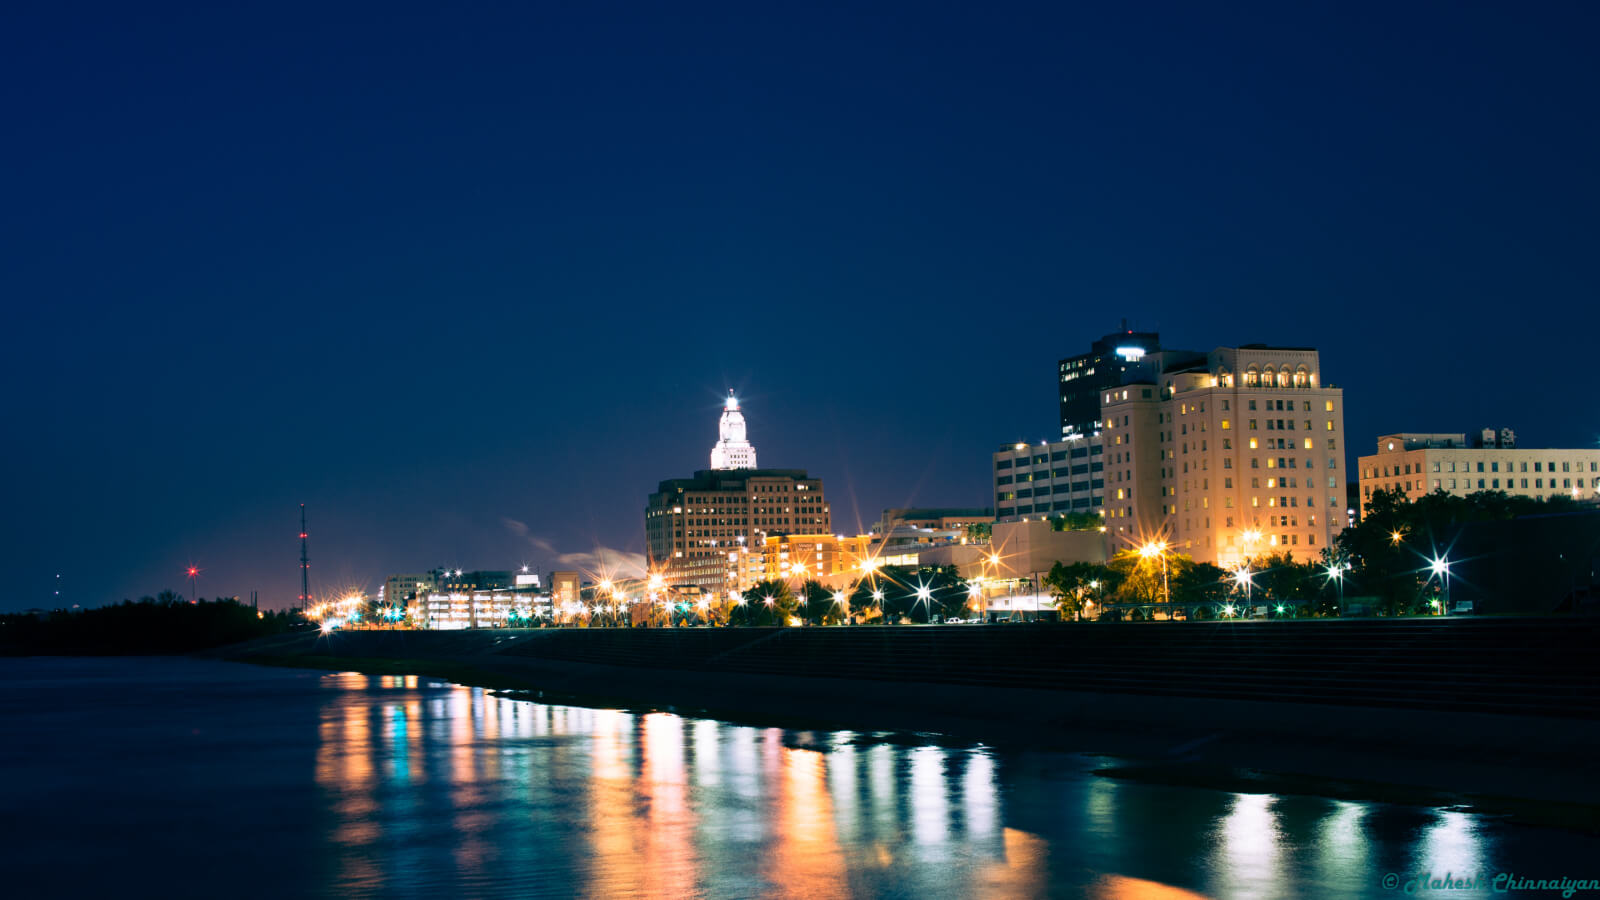 Downtown Baton Rouge at night